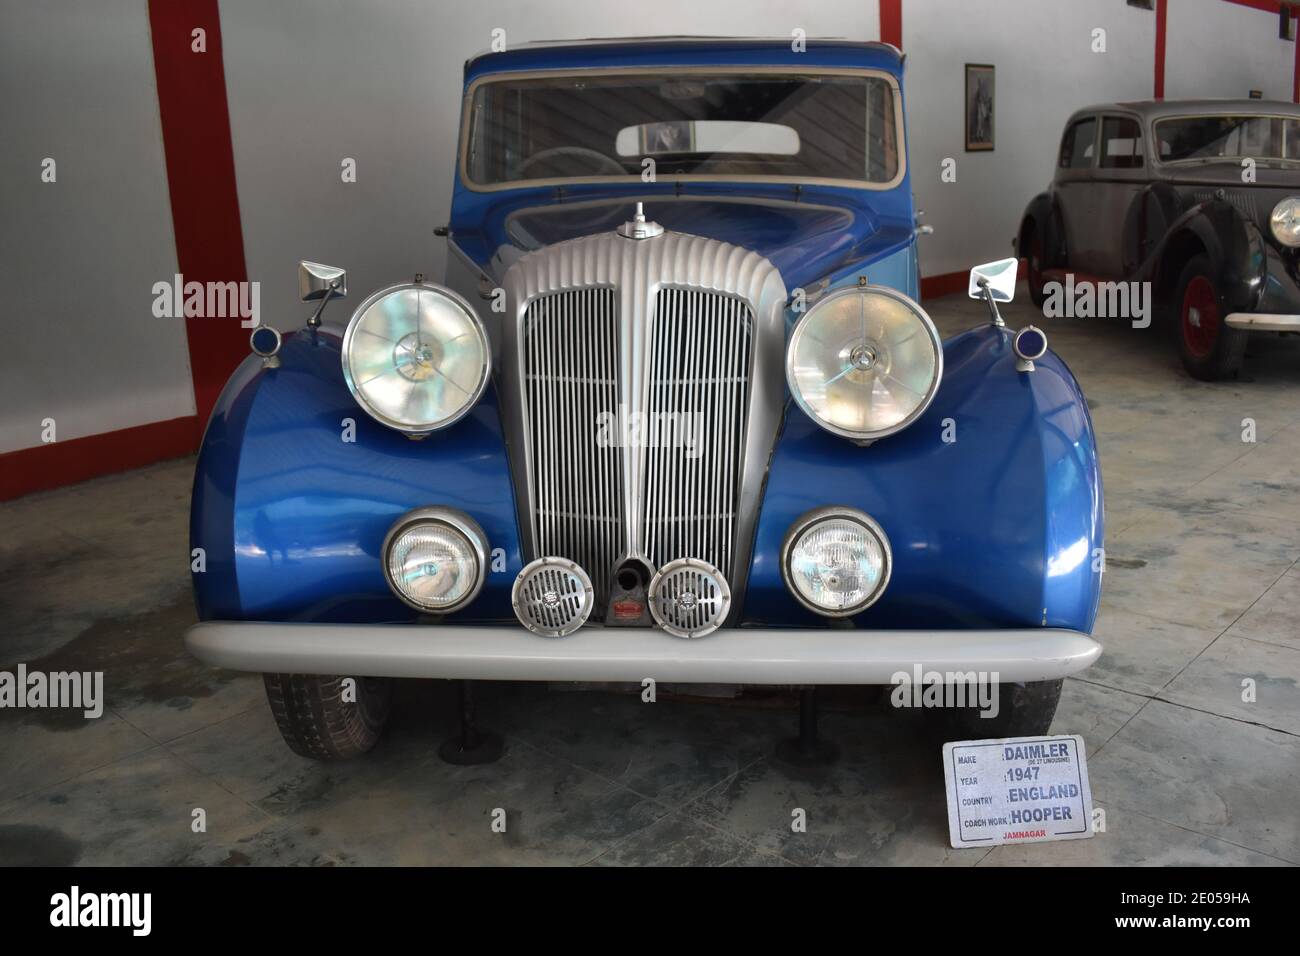 16 Nov 2020, Auto World Vintage Car Museum. Ahmedabad, Gujarat, India. DAIMLER YEAR 1947, ENGLAND, HOOPER Stock Photo